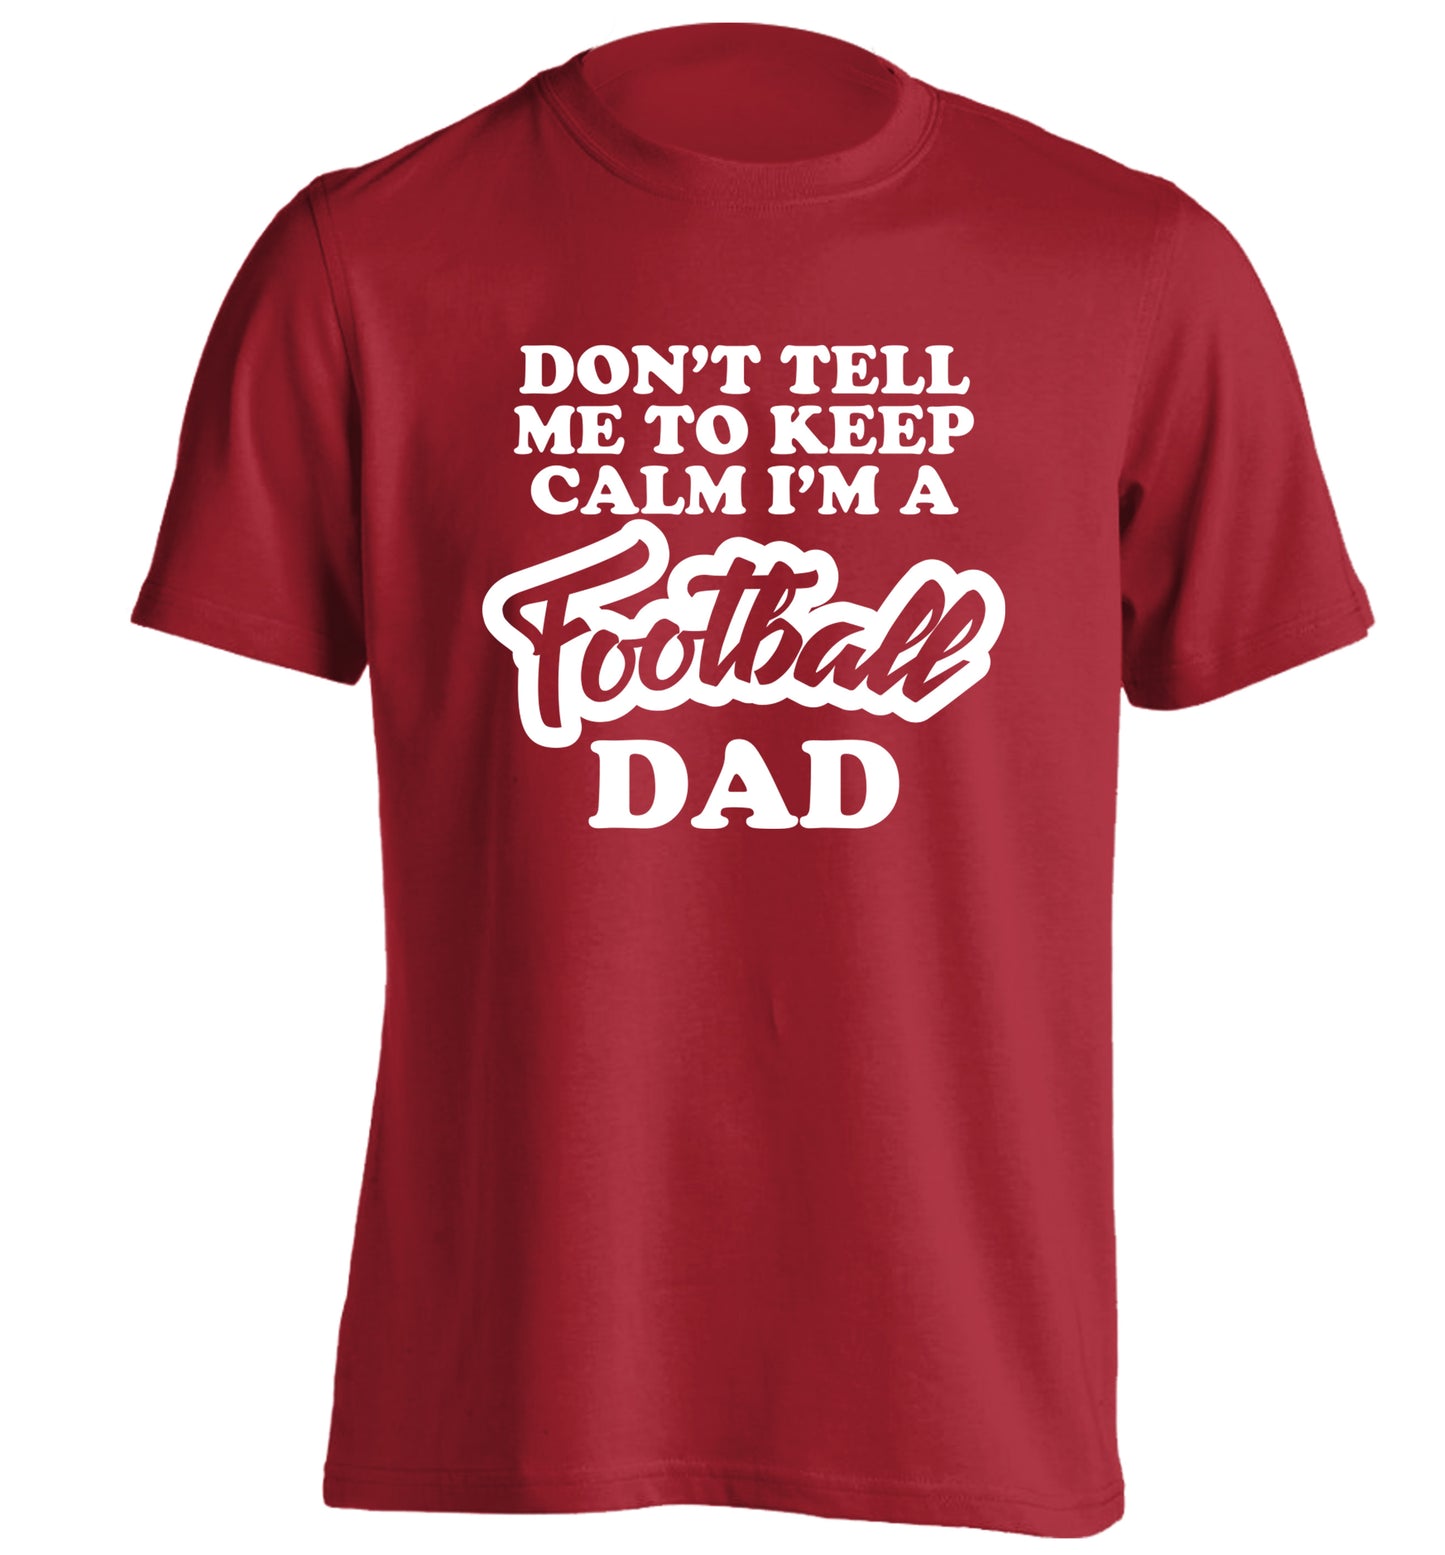 Don't tell me to keep calm I'm a football grandad adults unisexred Tshirt 2XL